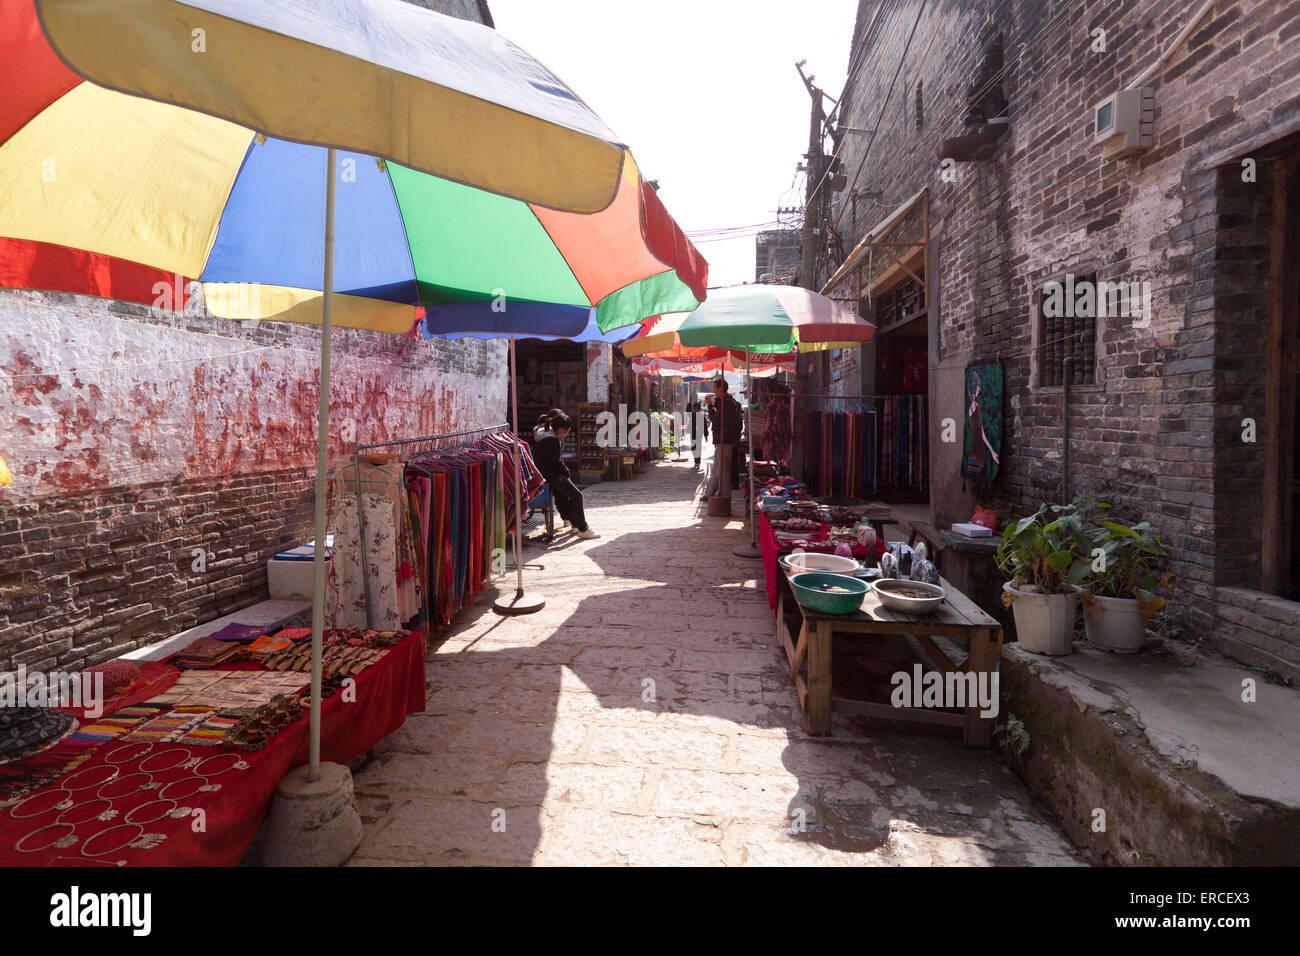 Stalls along street in China village Stock Photo